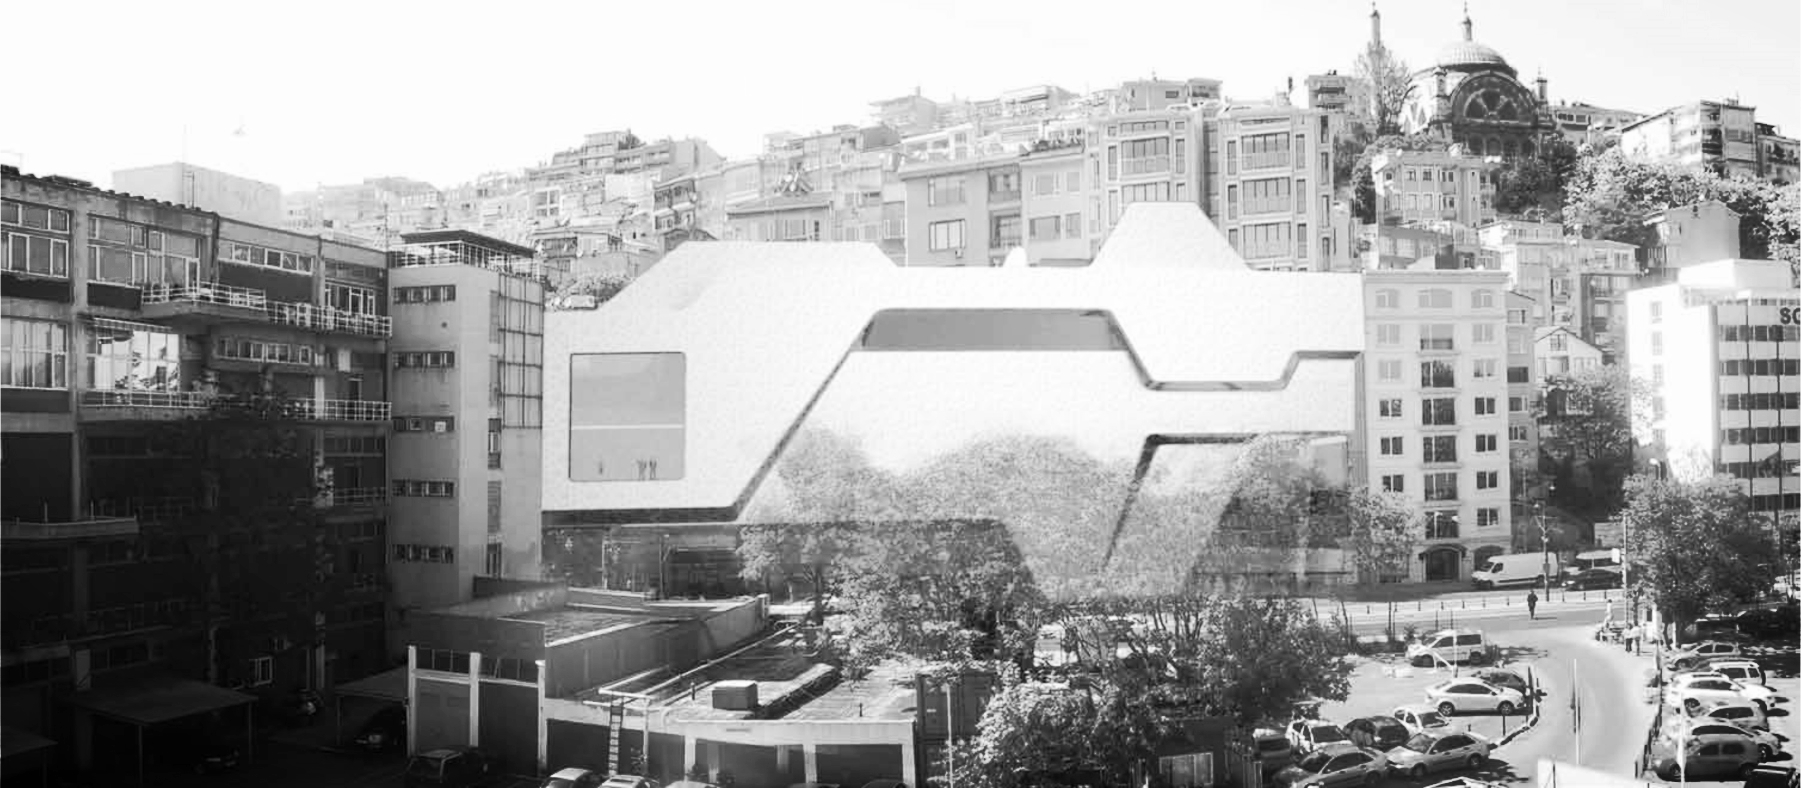 SALIPAZARI MUSEUM – ISTANBUL, TURKEY